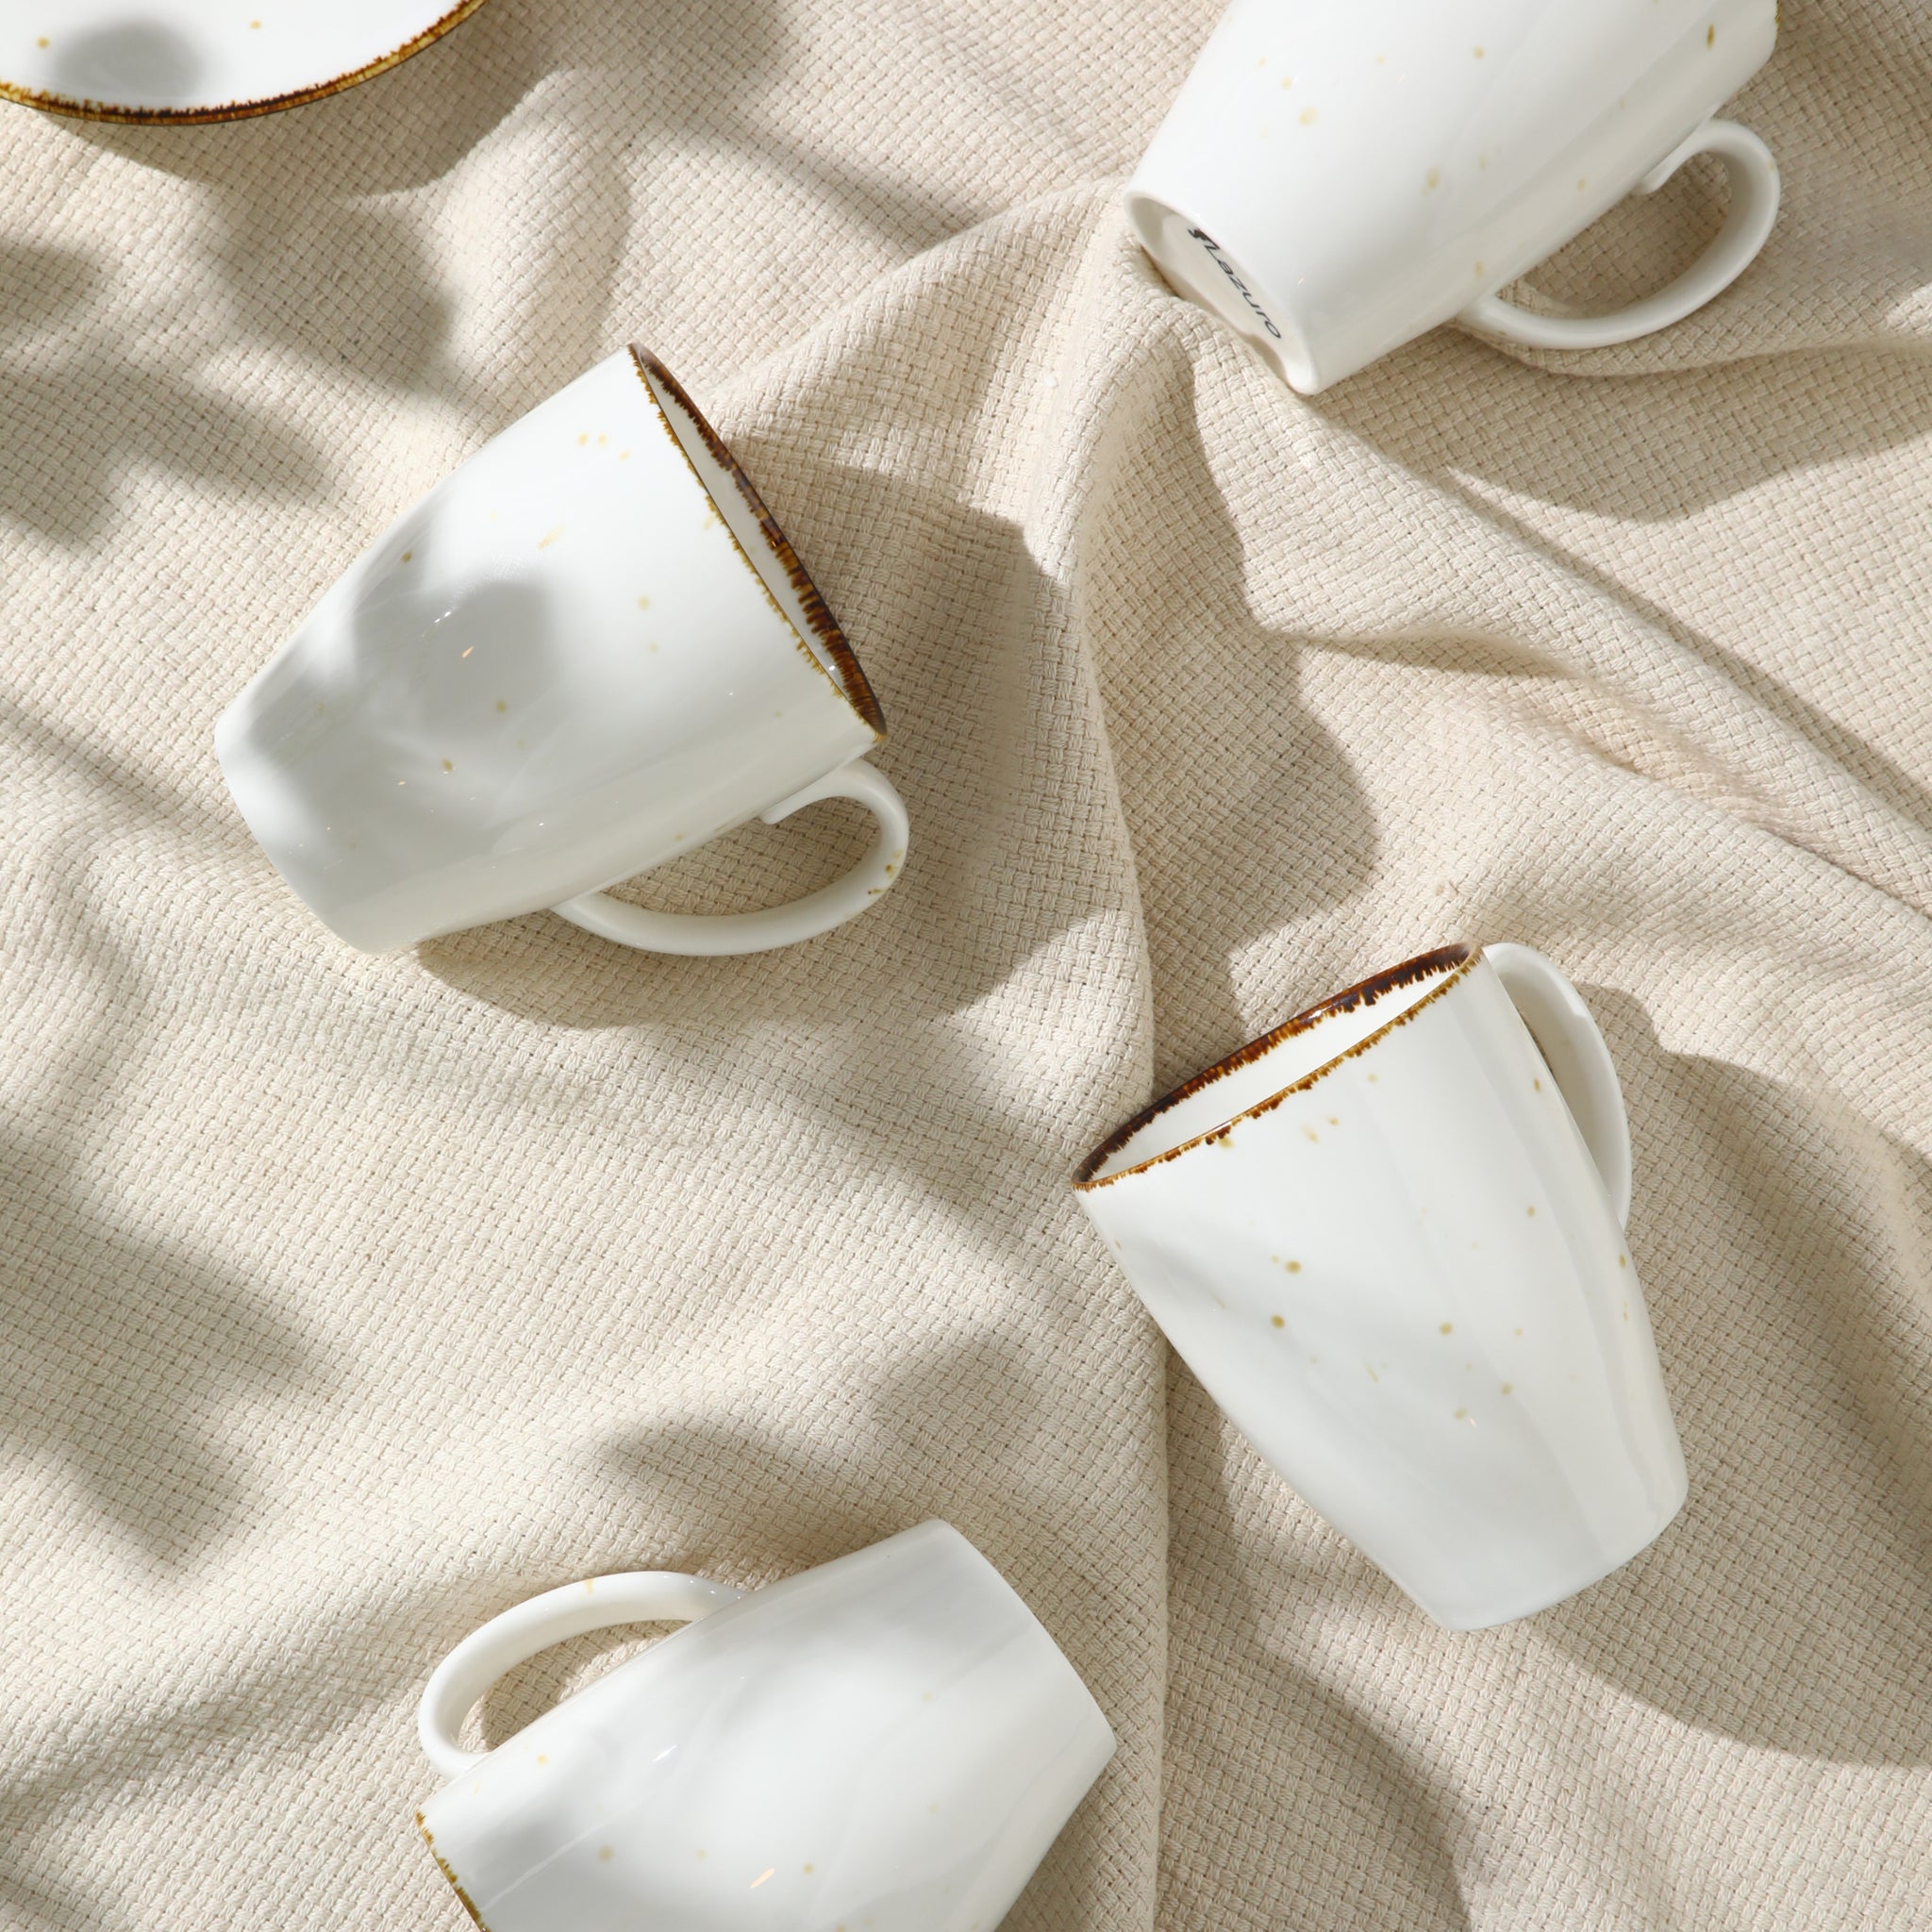 Coffee Mugs, Set of 4